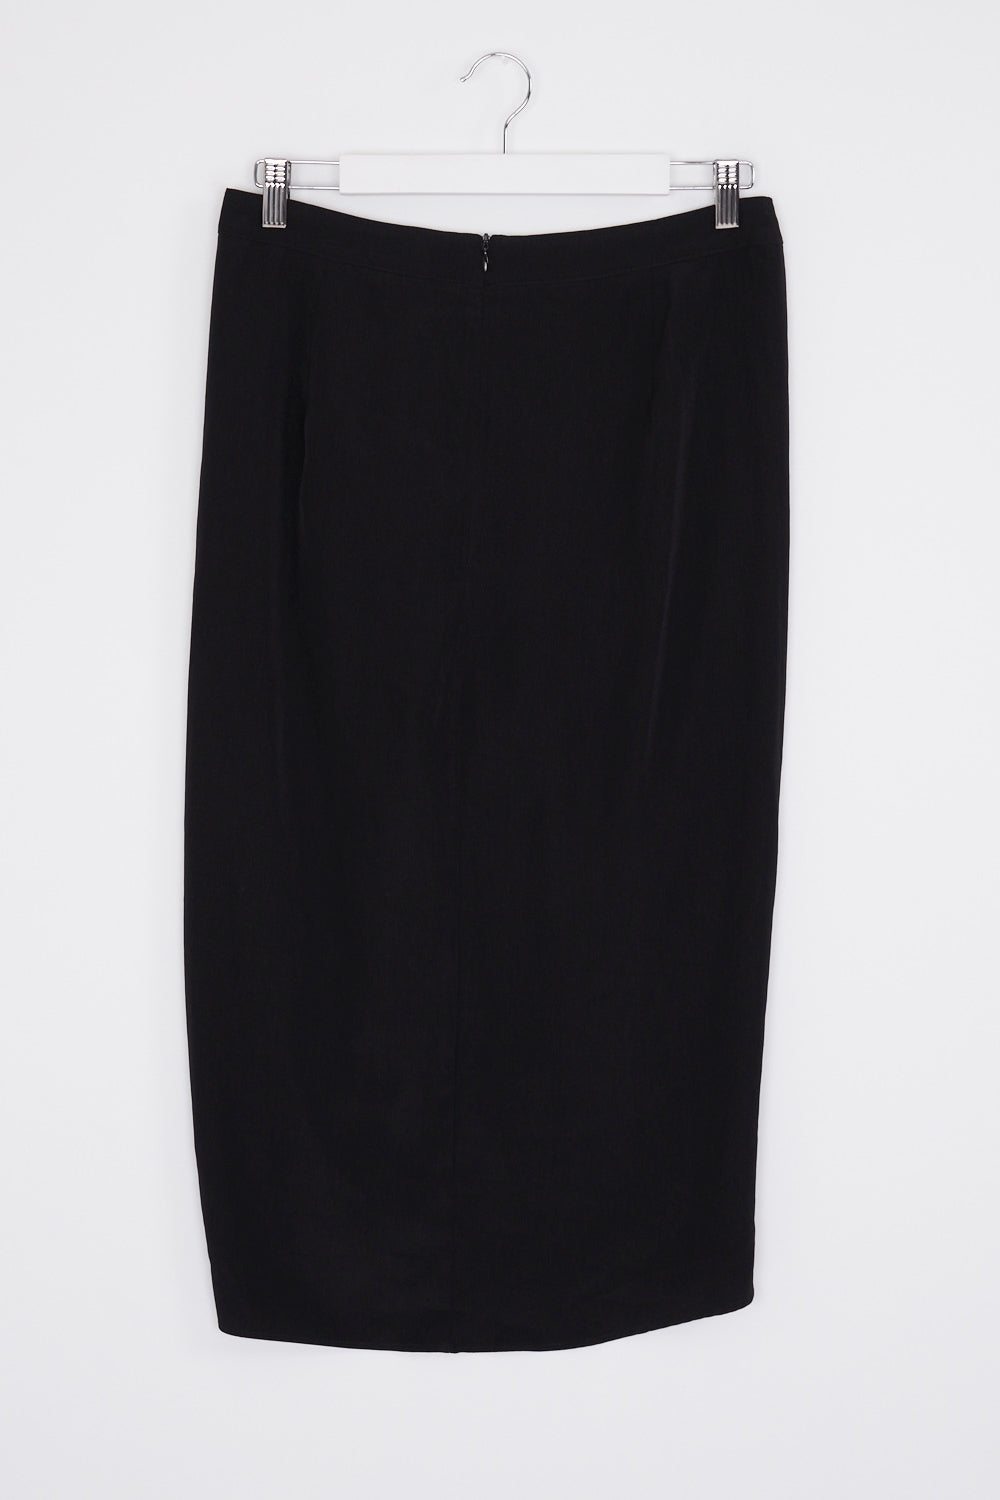 Sheike Black Pleated Front Midi Skirt 12